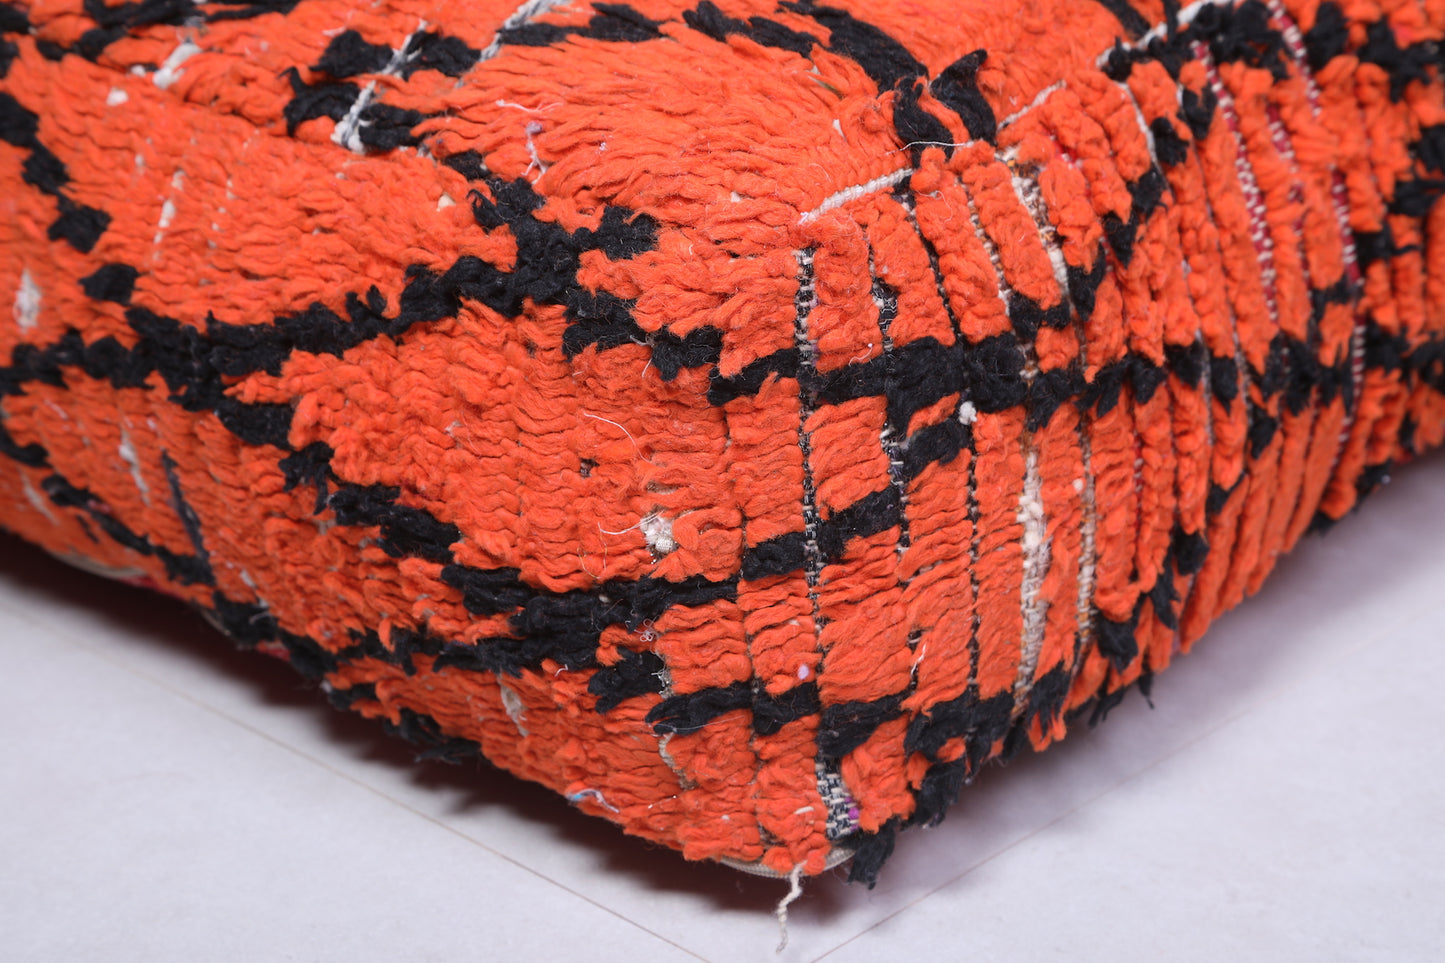 Two handmade berber red rug pouf